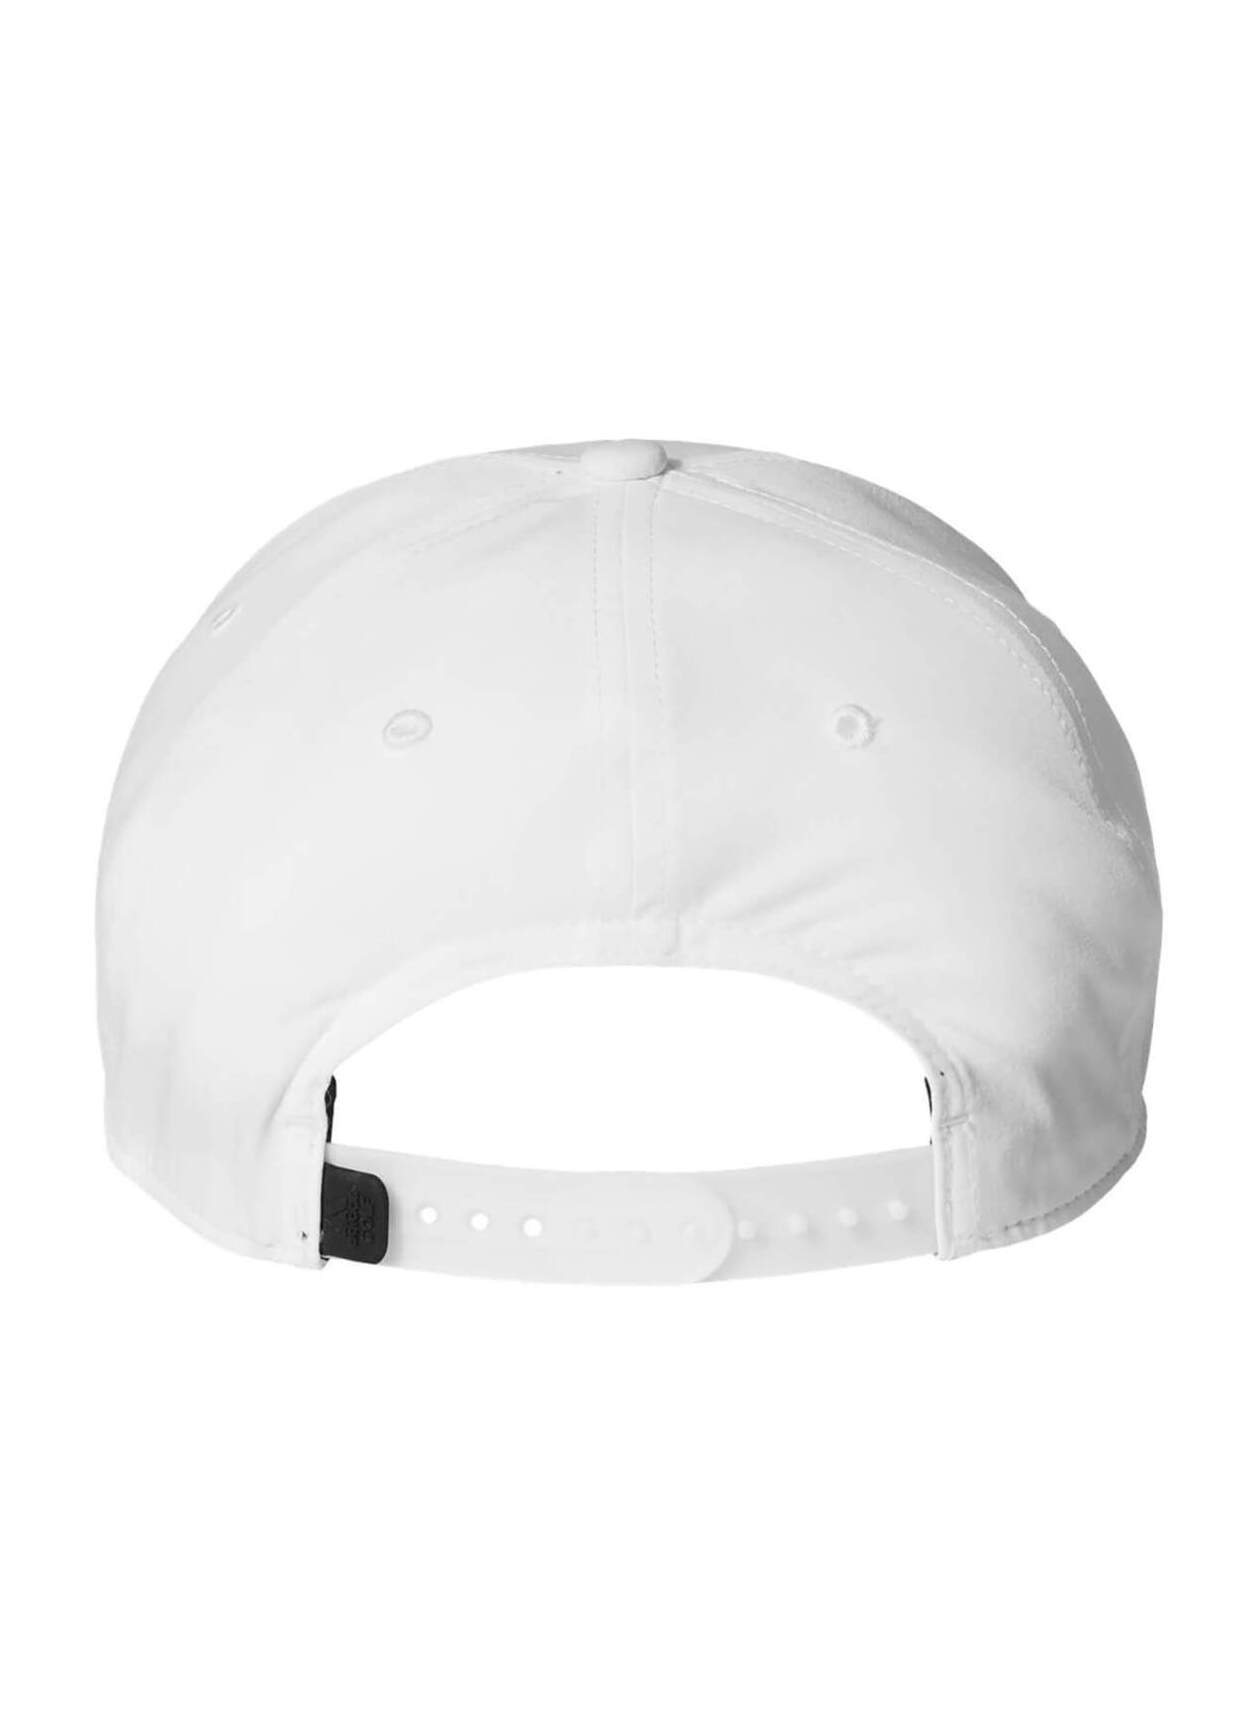 Adidas White Bold 3-Stripes Cap | Adidas 白色粗體三條紋帽子